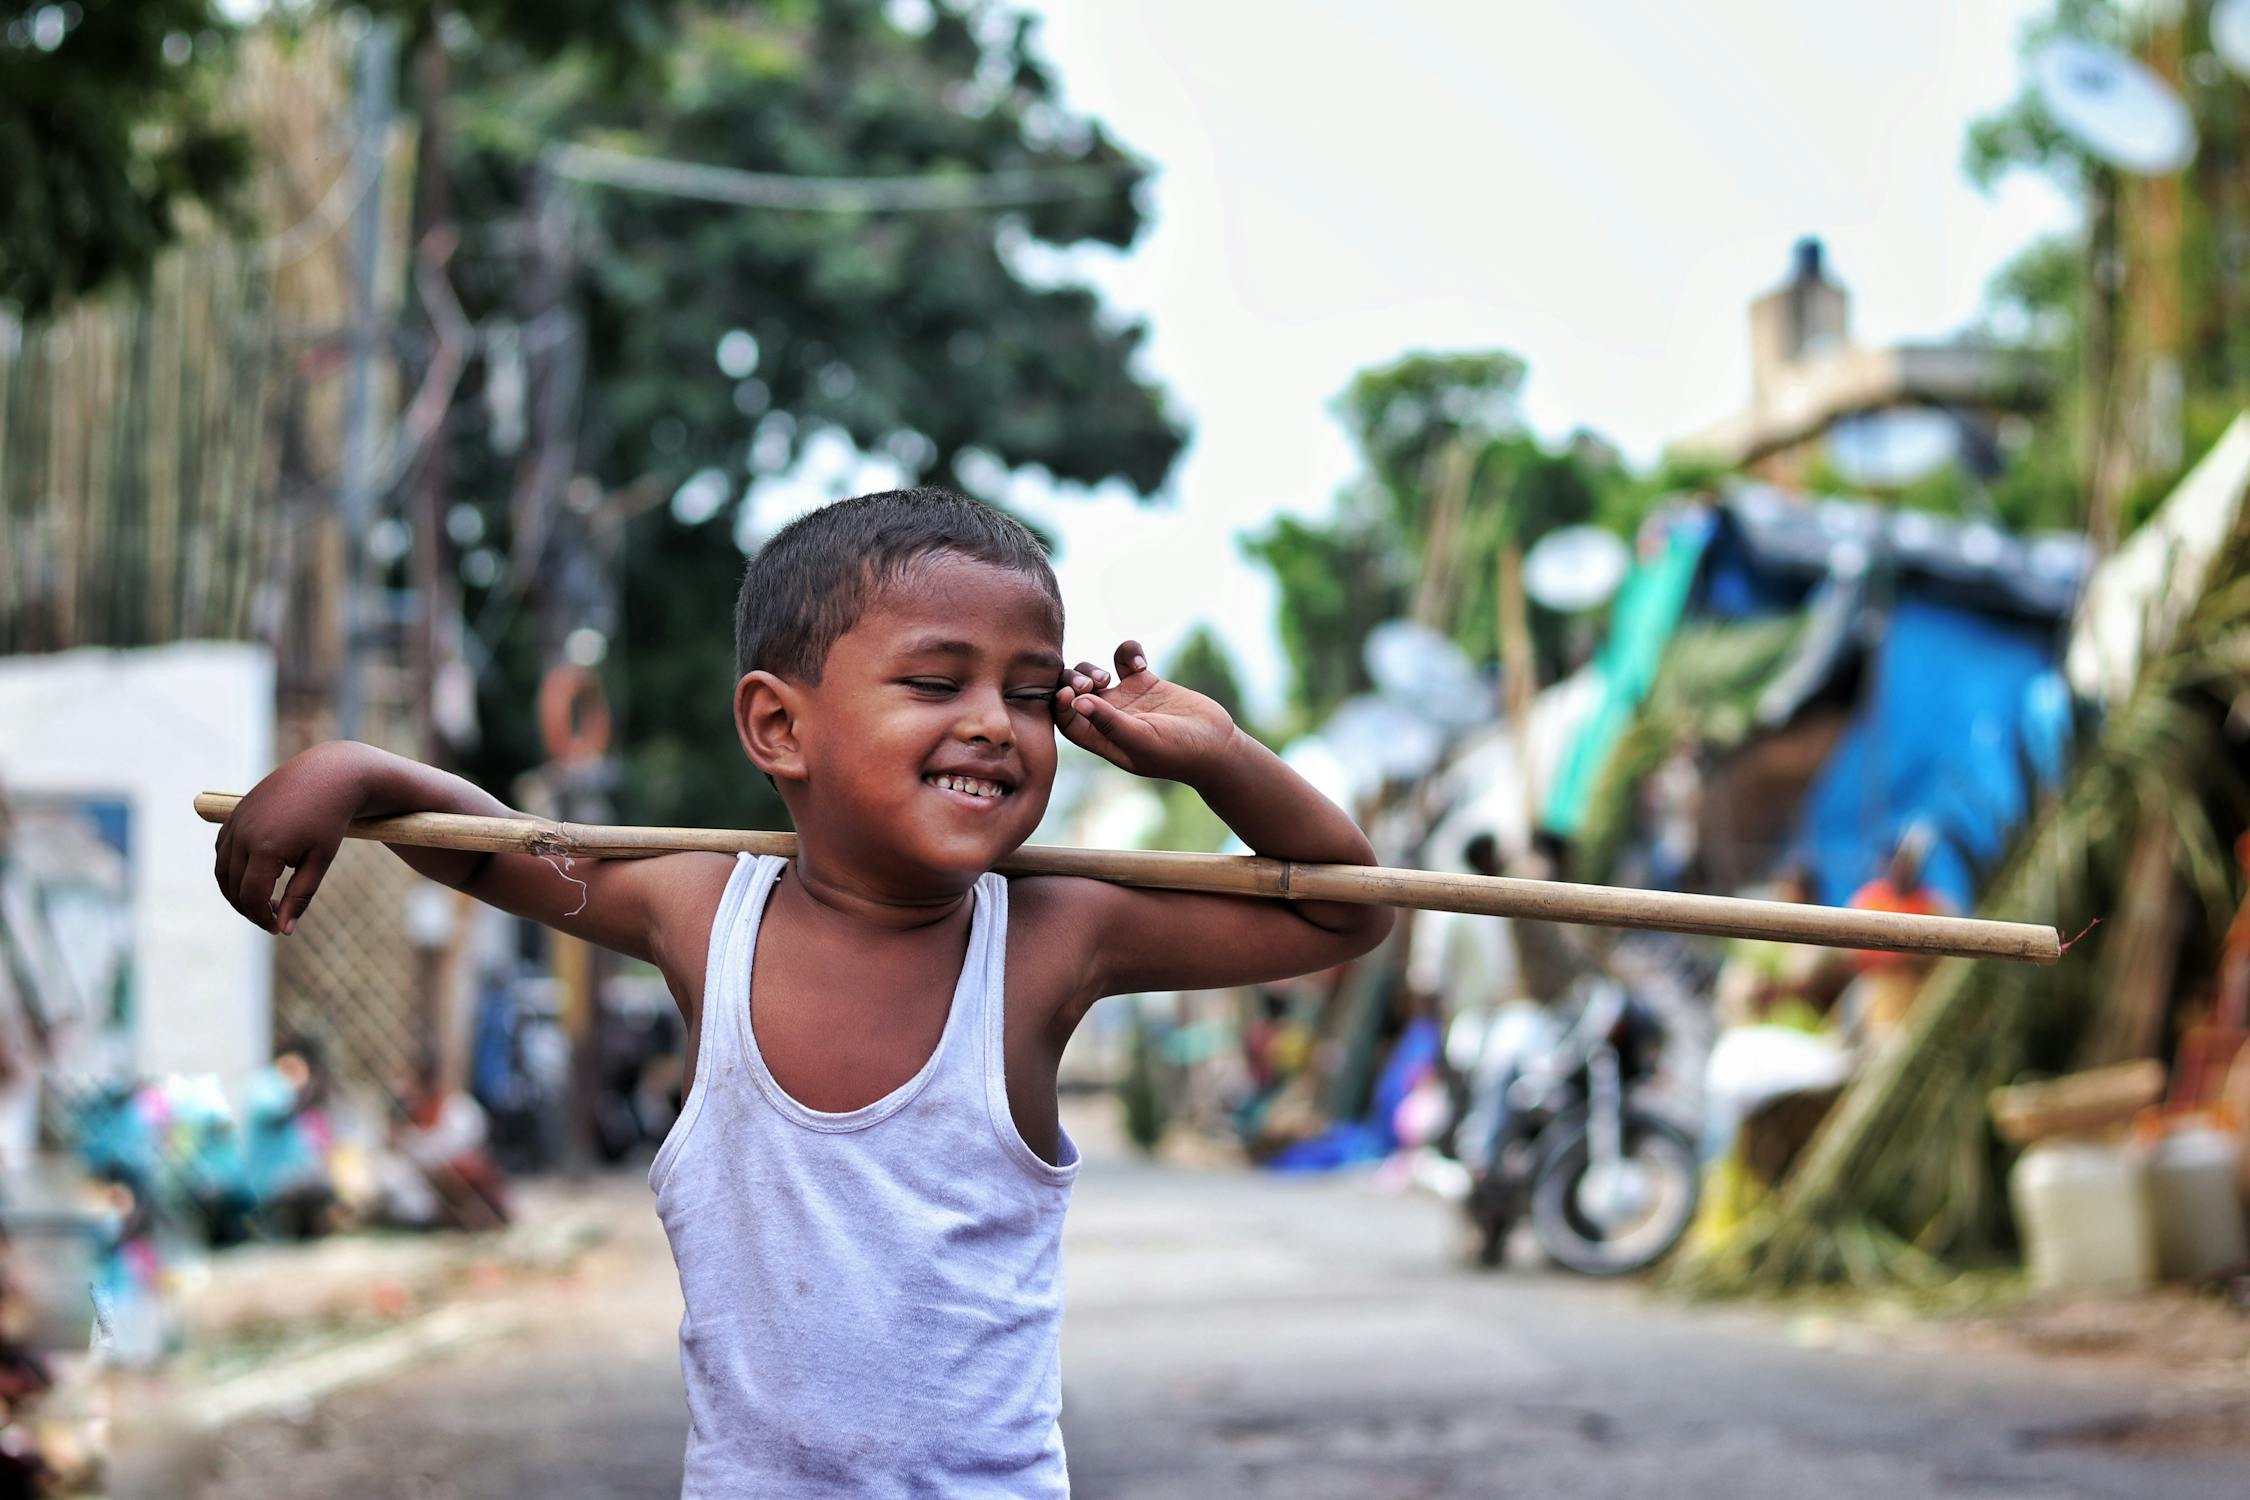 Indian Kid having fun Photo by Harsha Vardhan from Pexels